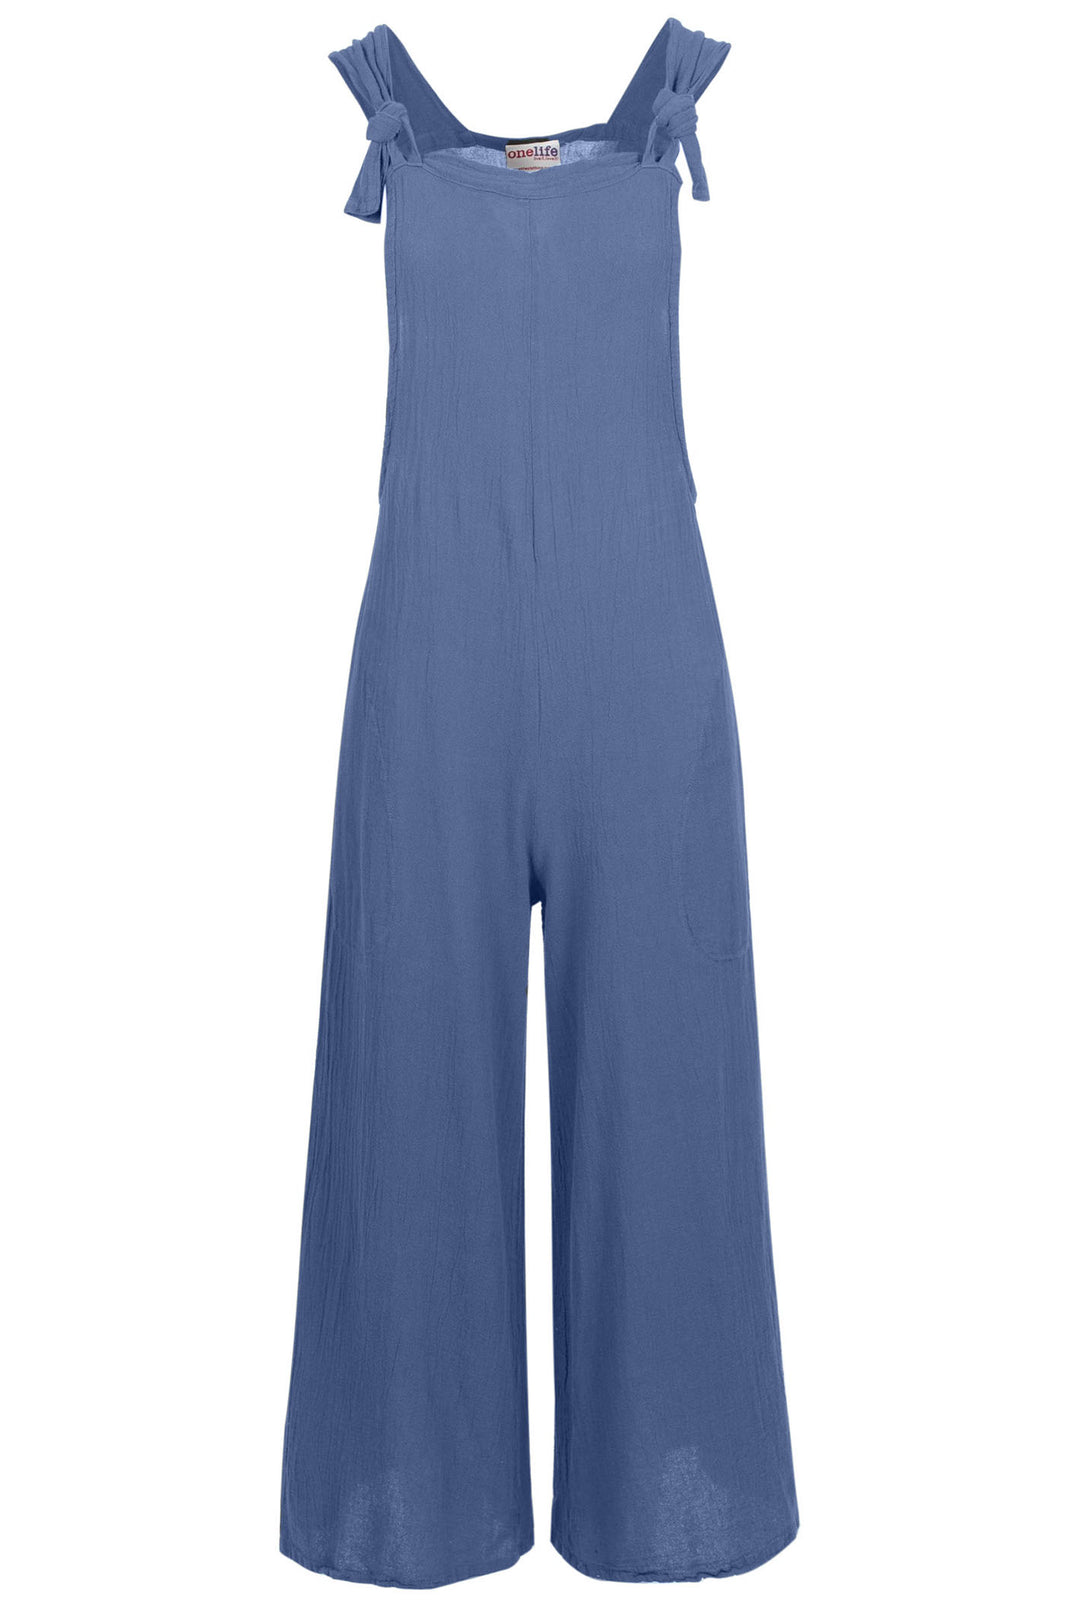 Onelife D606 Sabina Neptune Blue Cotton Jumpsuit - Experience Boutique